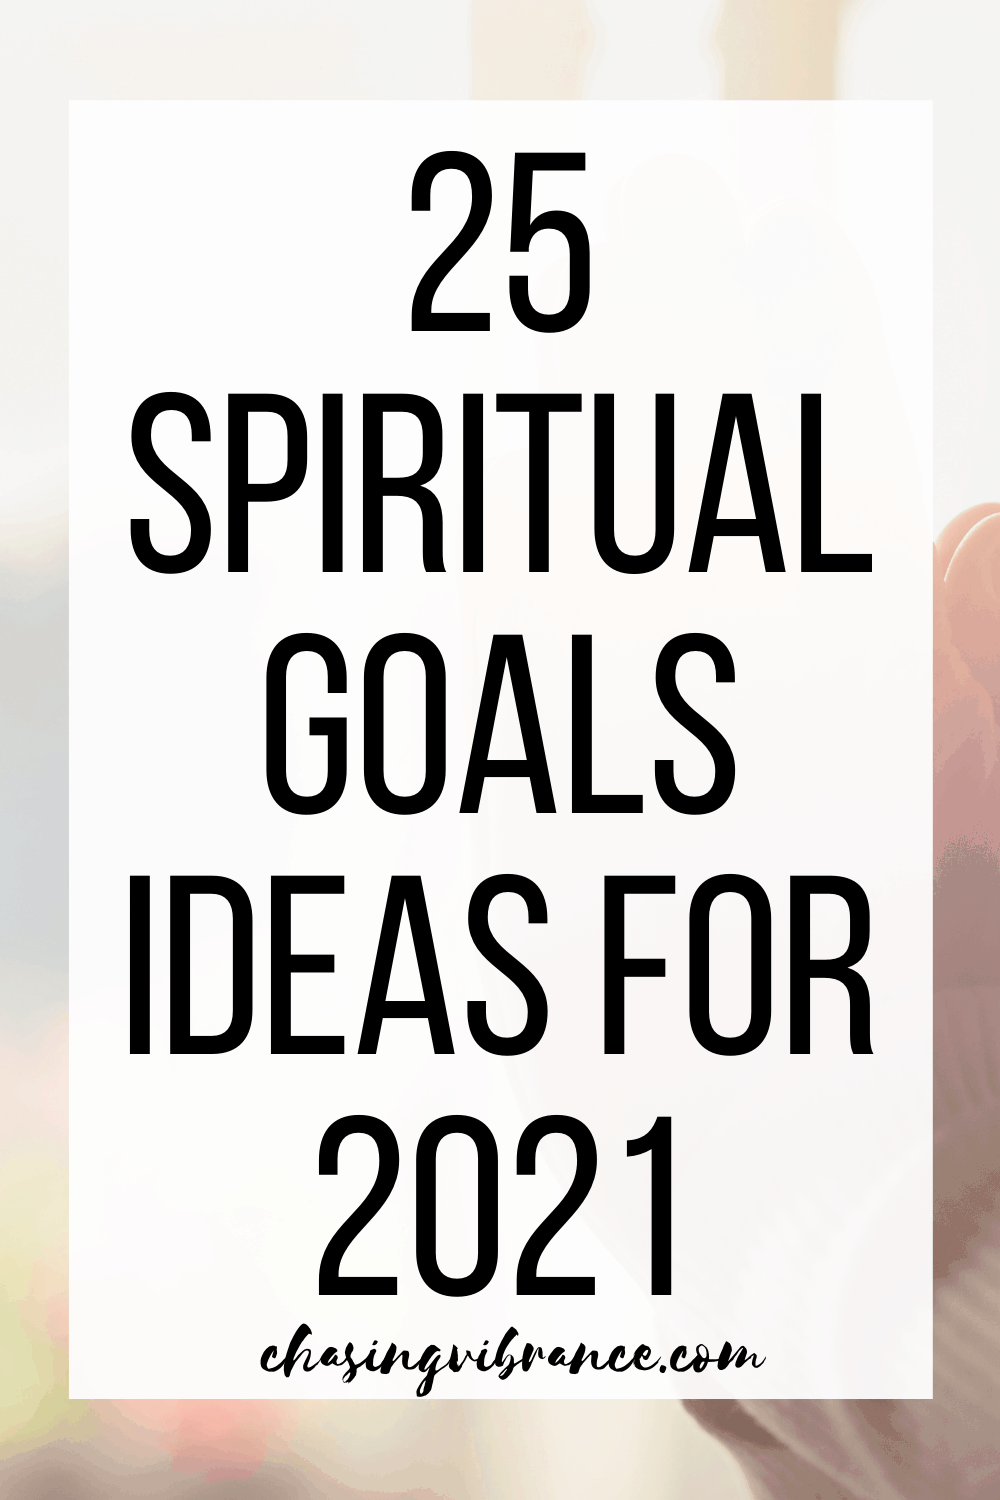 Choosing Your Spiritual Goals for 2023